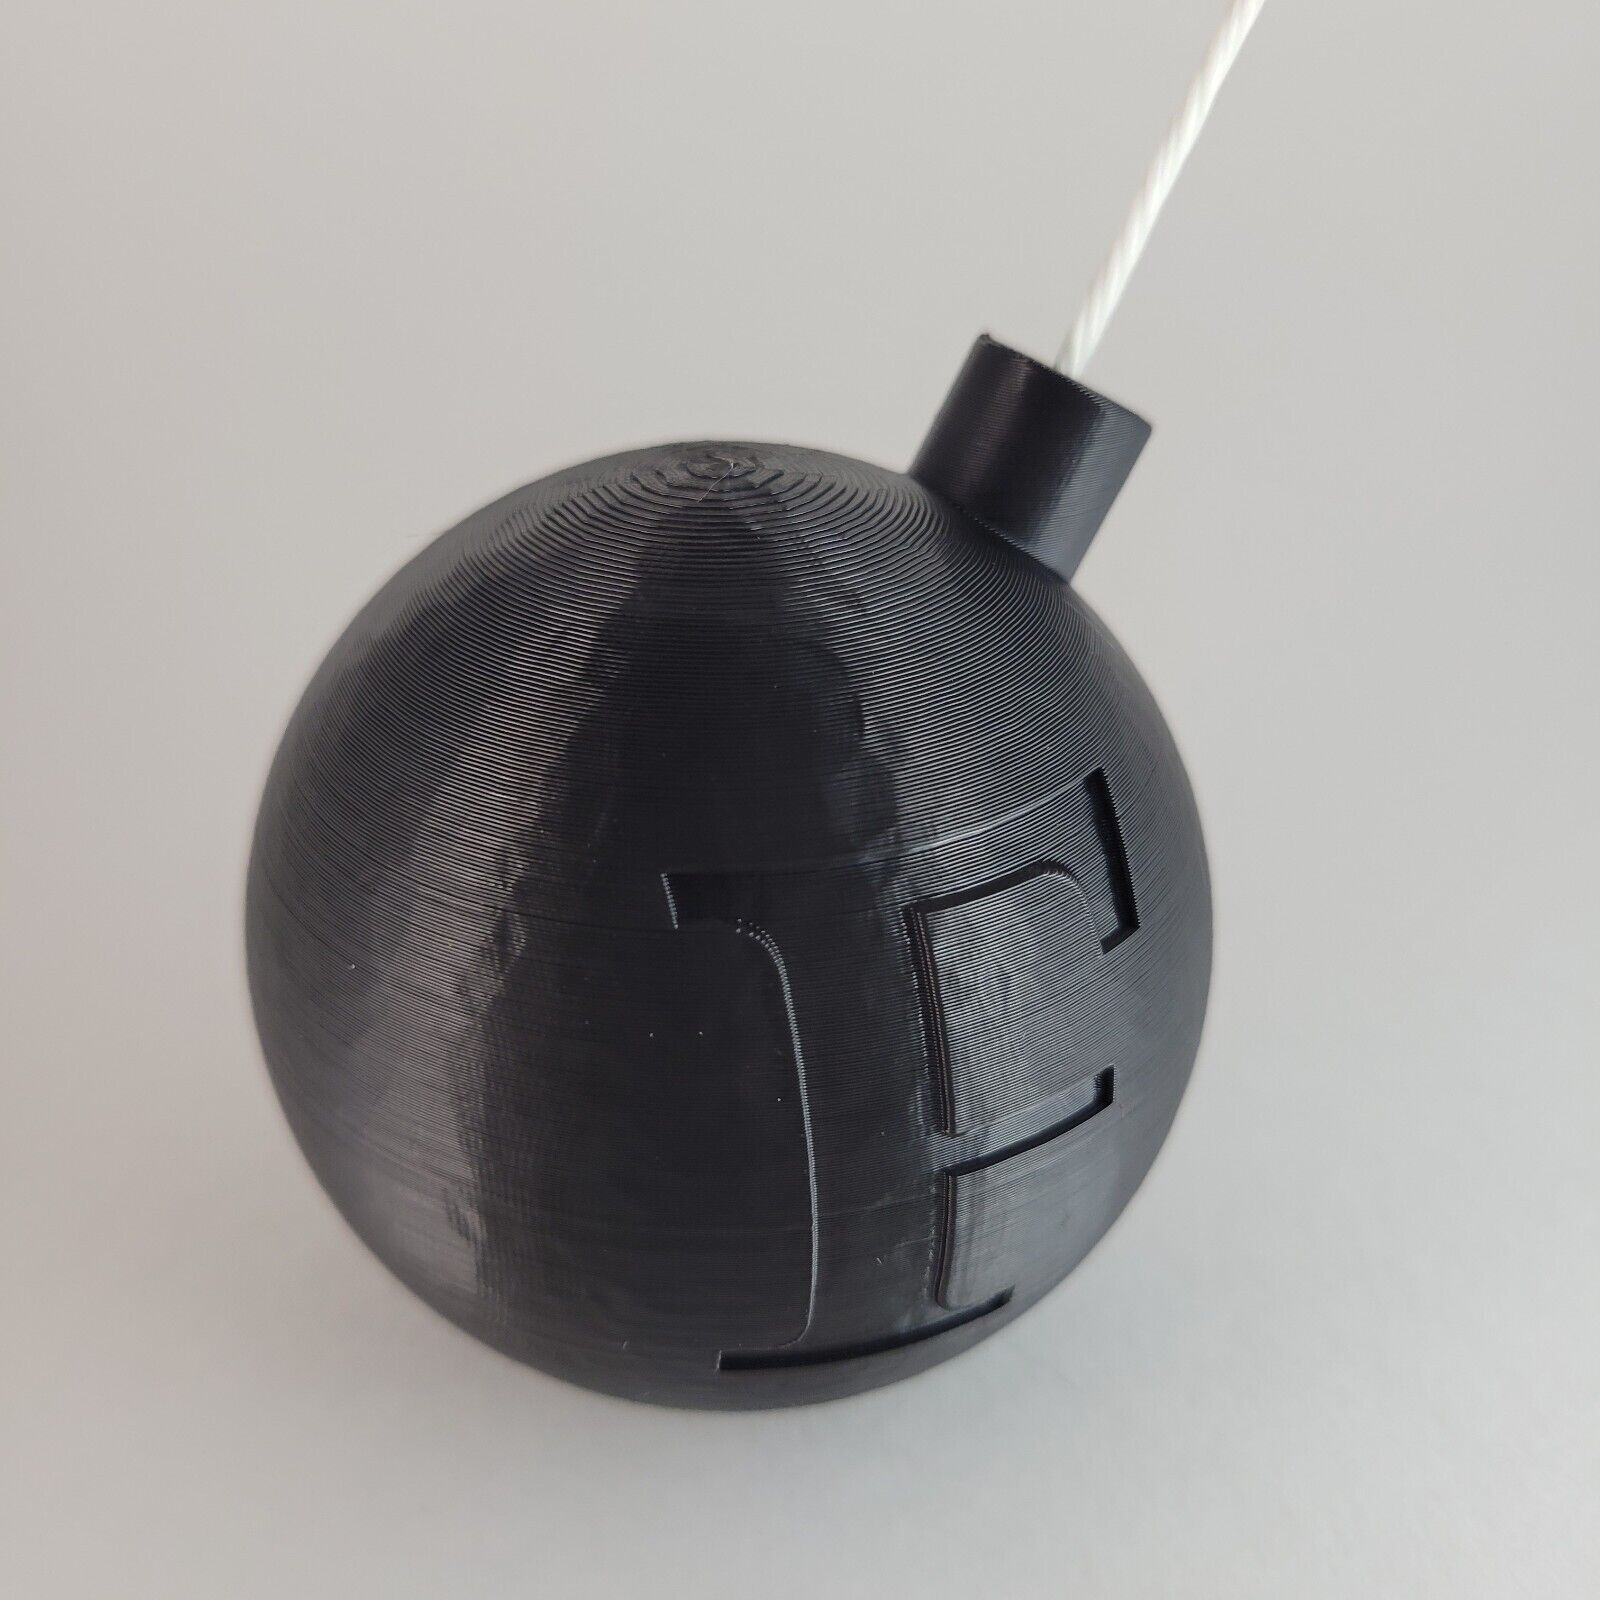 F-BOMB  3 Inch Black Paperweight Fun Gift, Stress Relief/Fidget Toy, Desk Decor